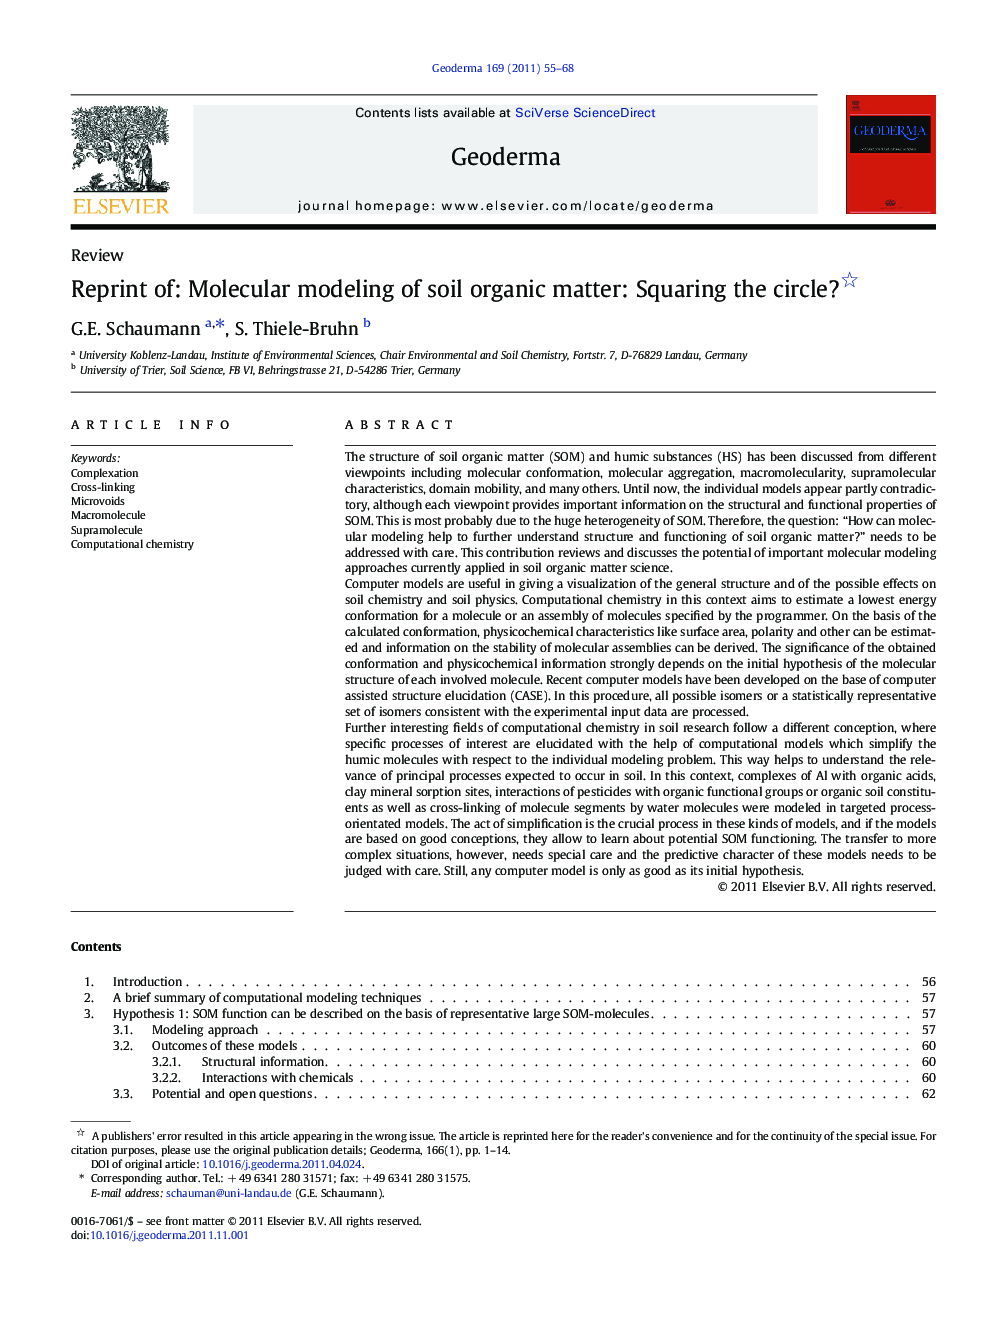 Reprint of: Molecular modeling of soil organic matter: Squaring the circle? 